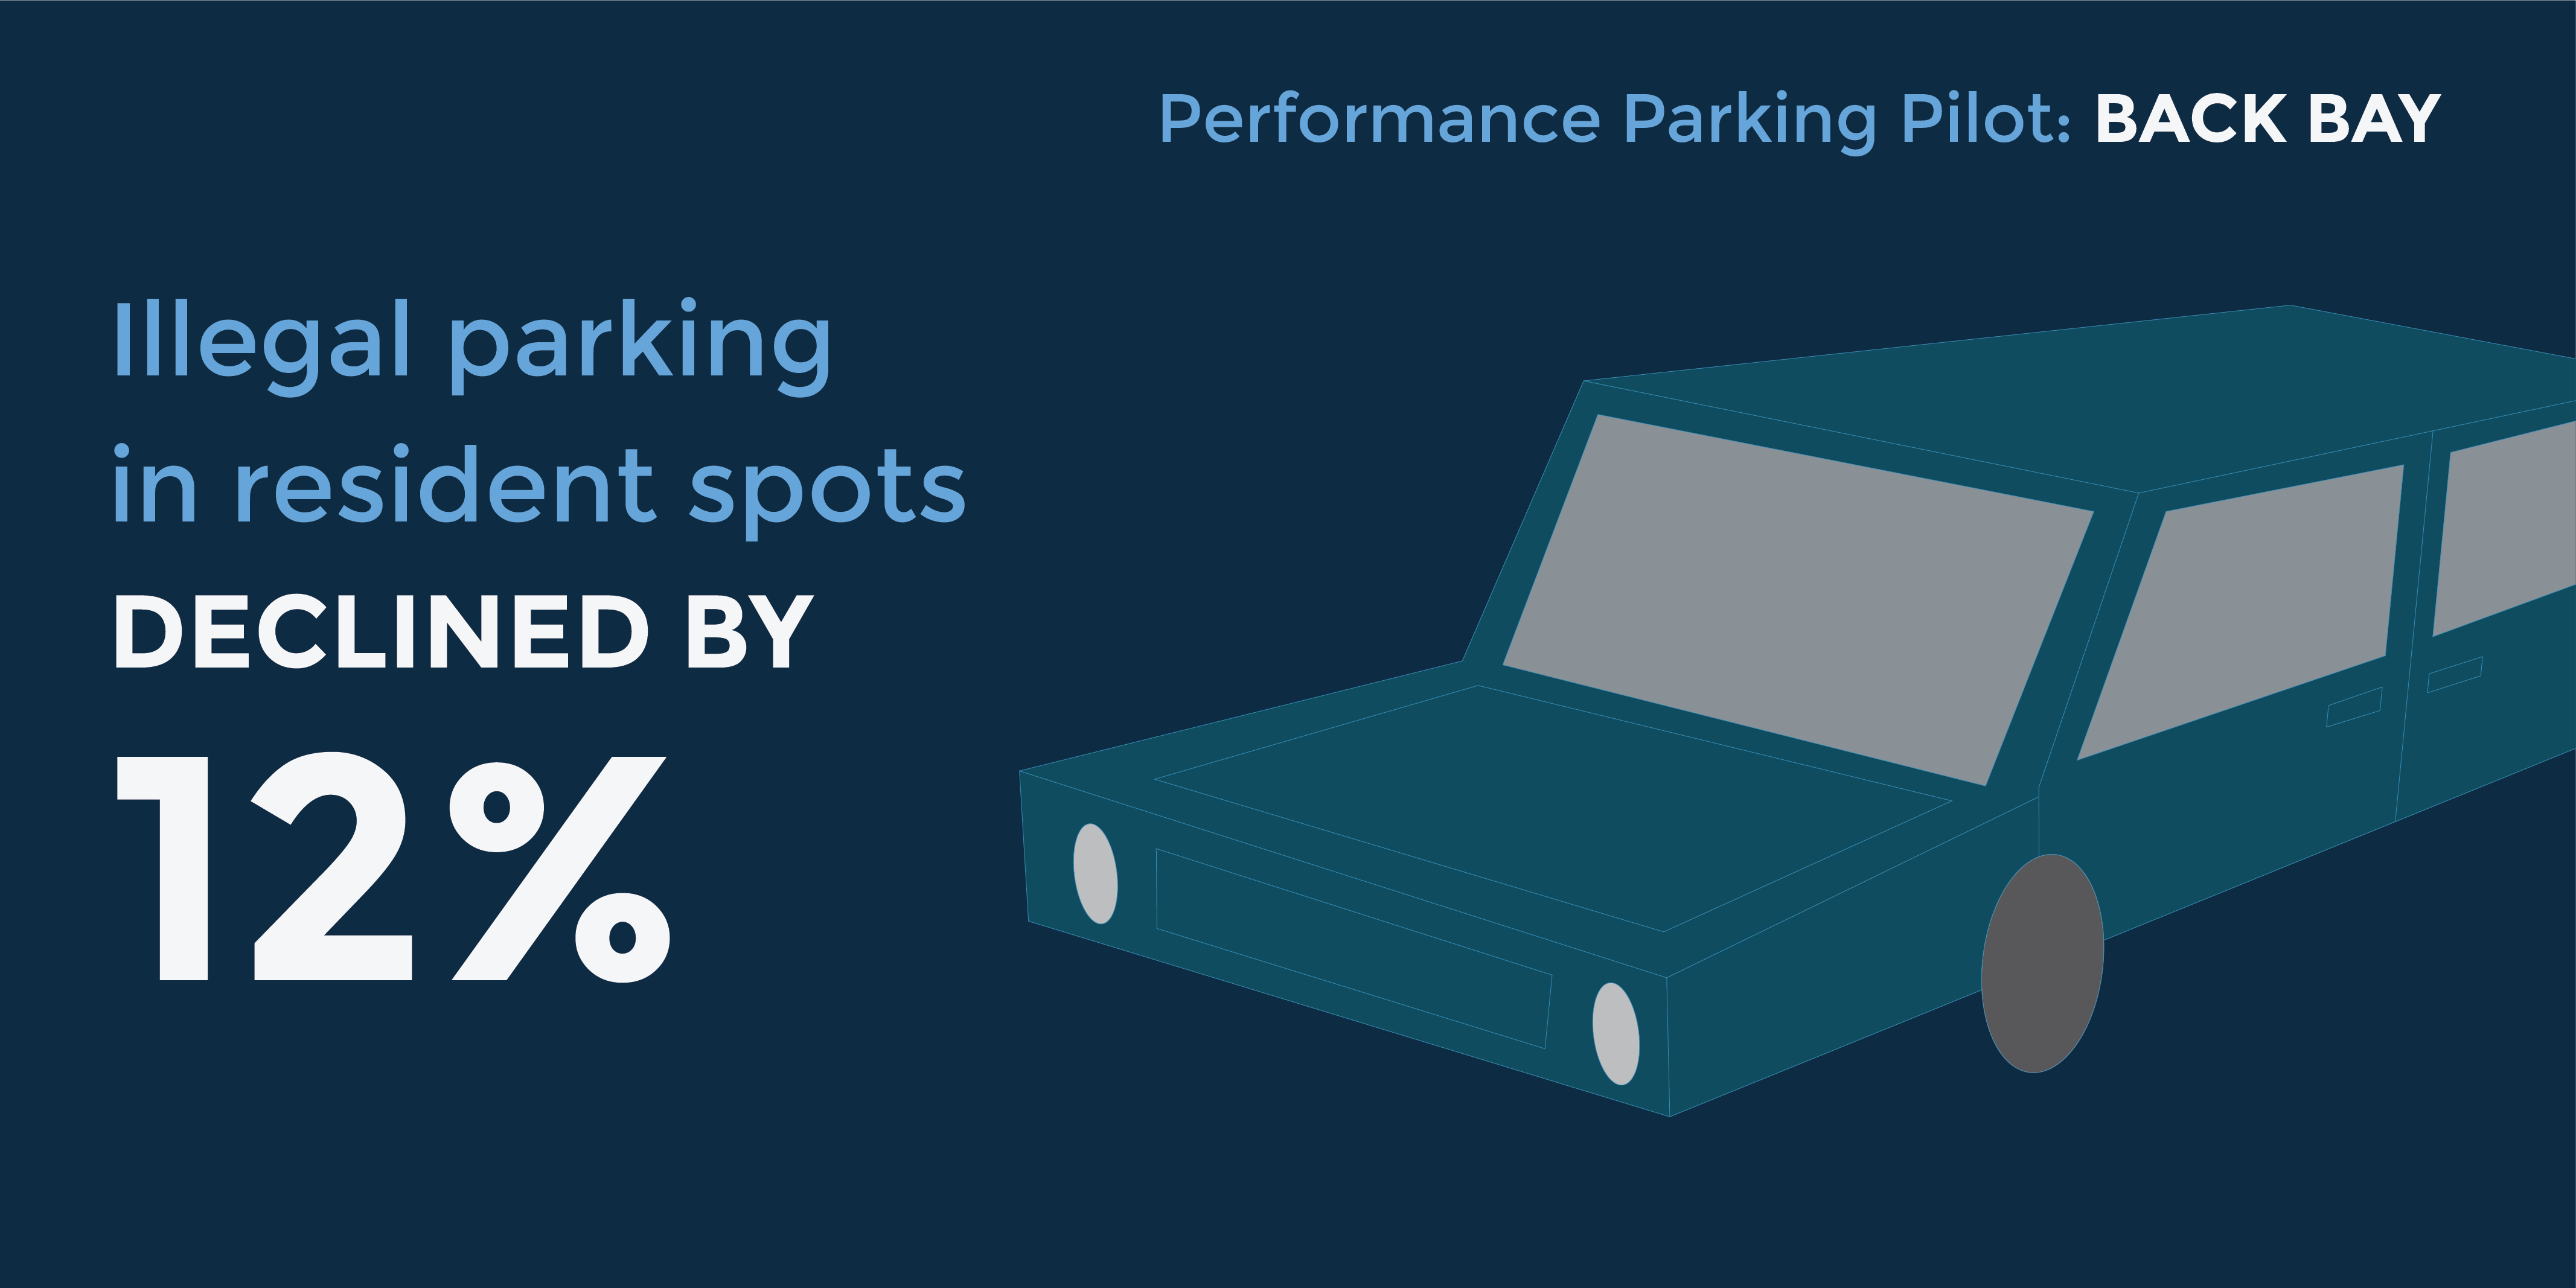 Image for back bay illegal parking stats